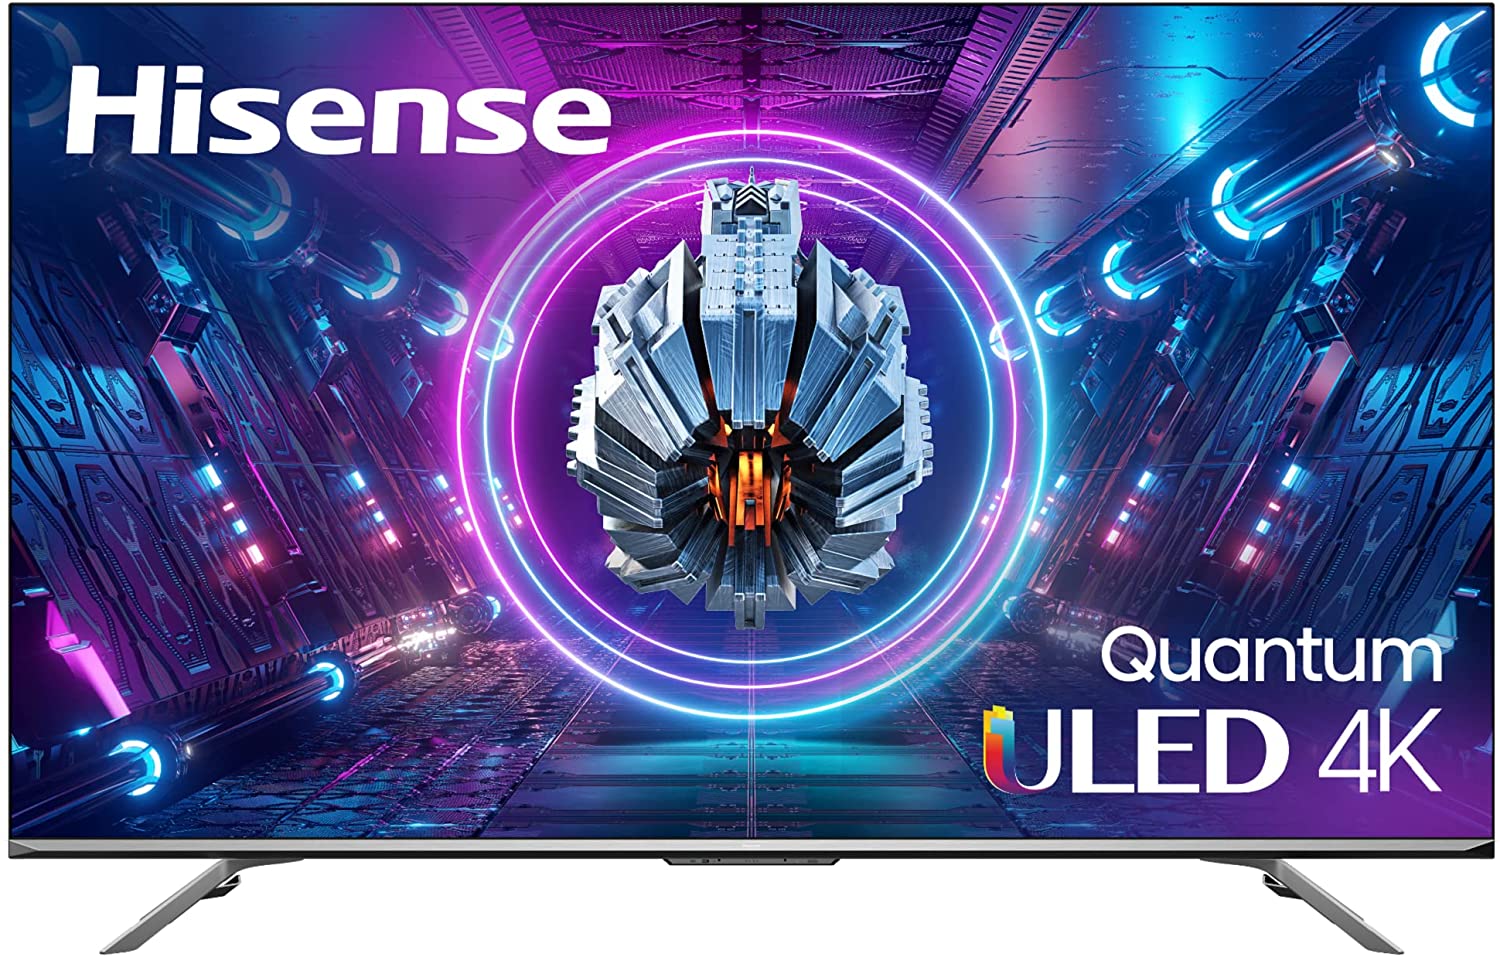 Hisense ULED Premium 55U7G QLED Series 55-inch Android 4K Smart TV for $499